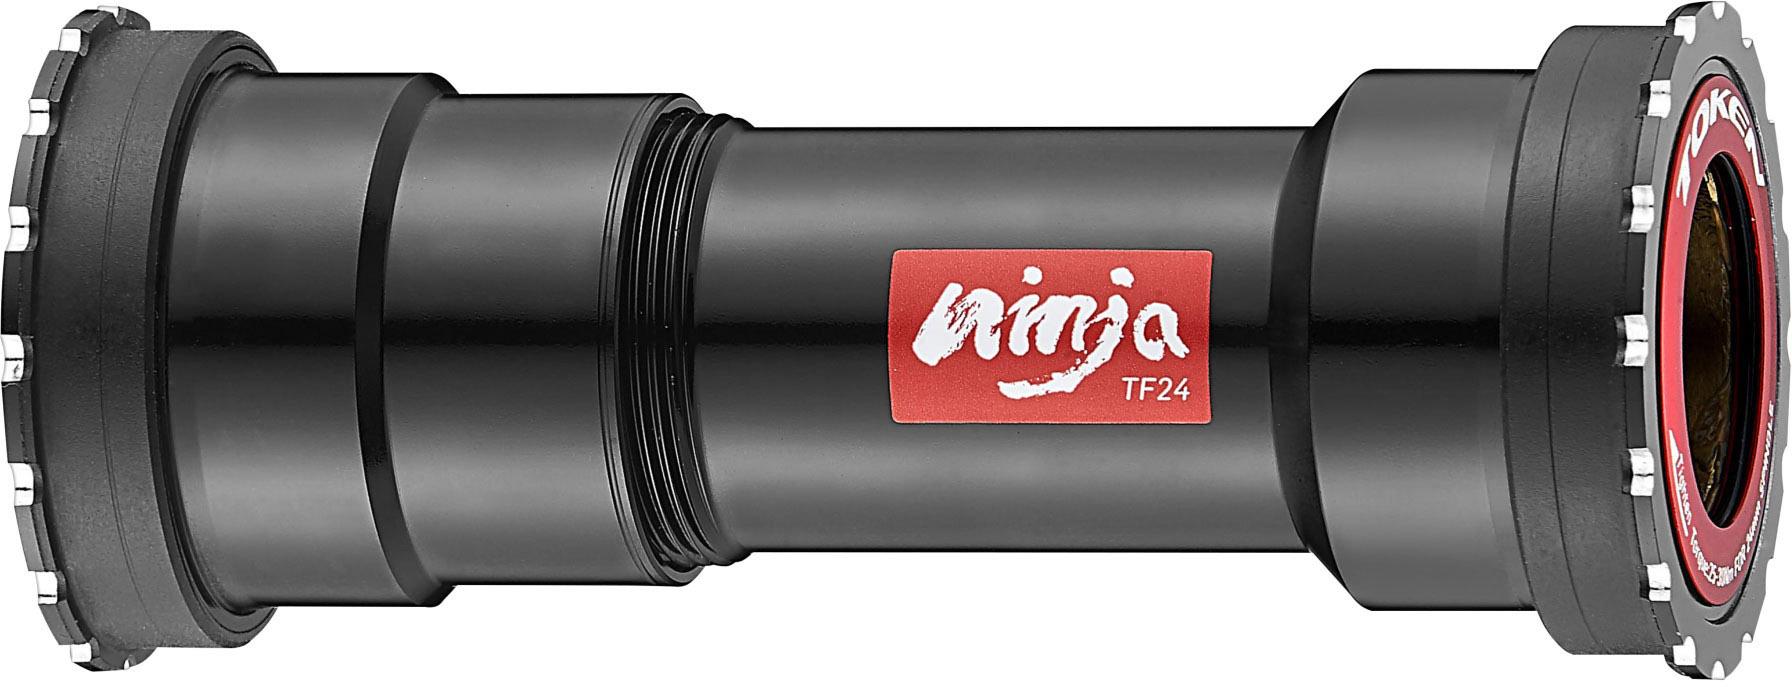 Token Ninja Bb86/89.5/92 Shimano 24mm Bottom Bracket - Black